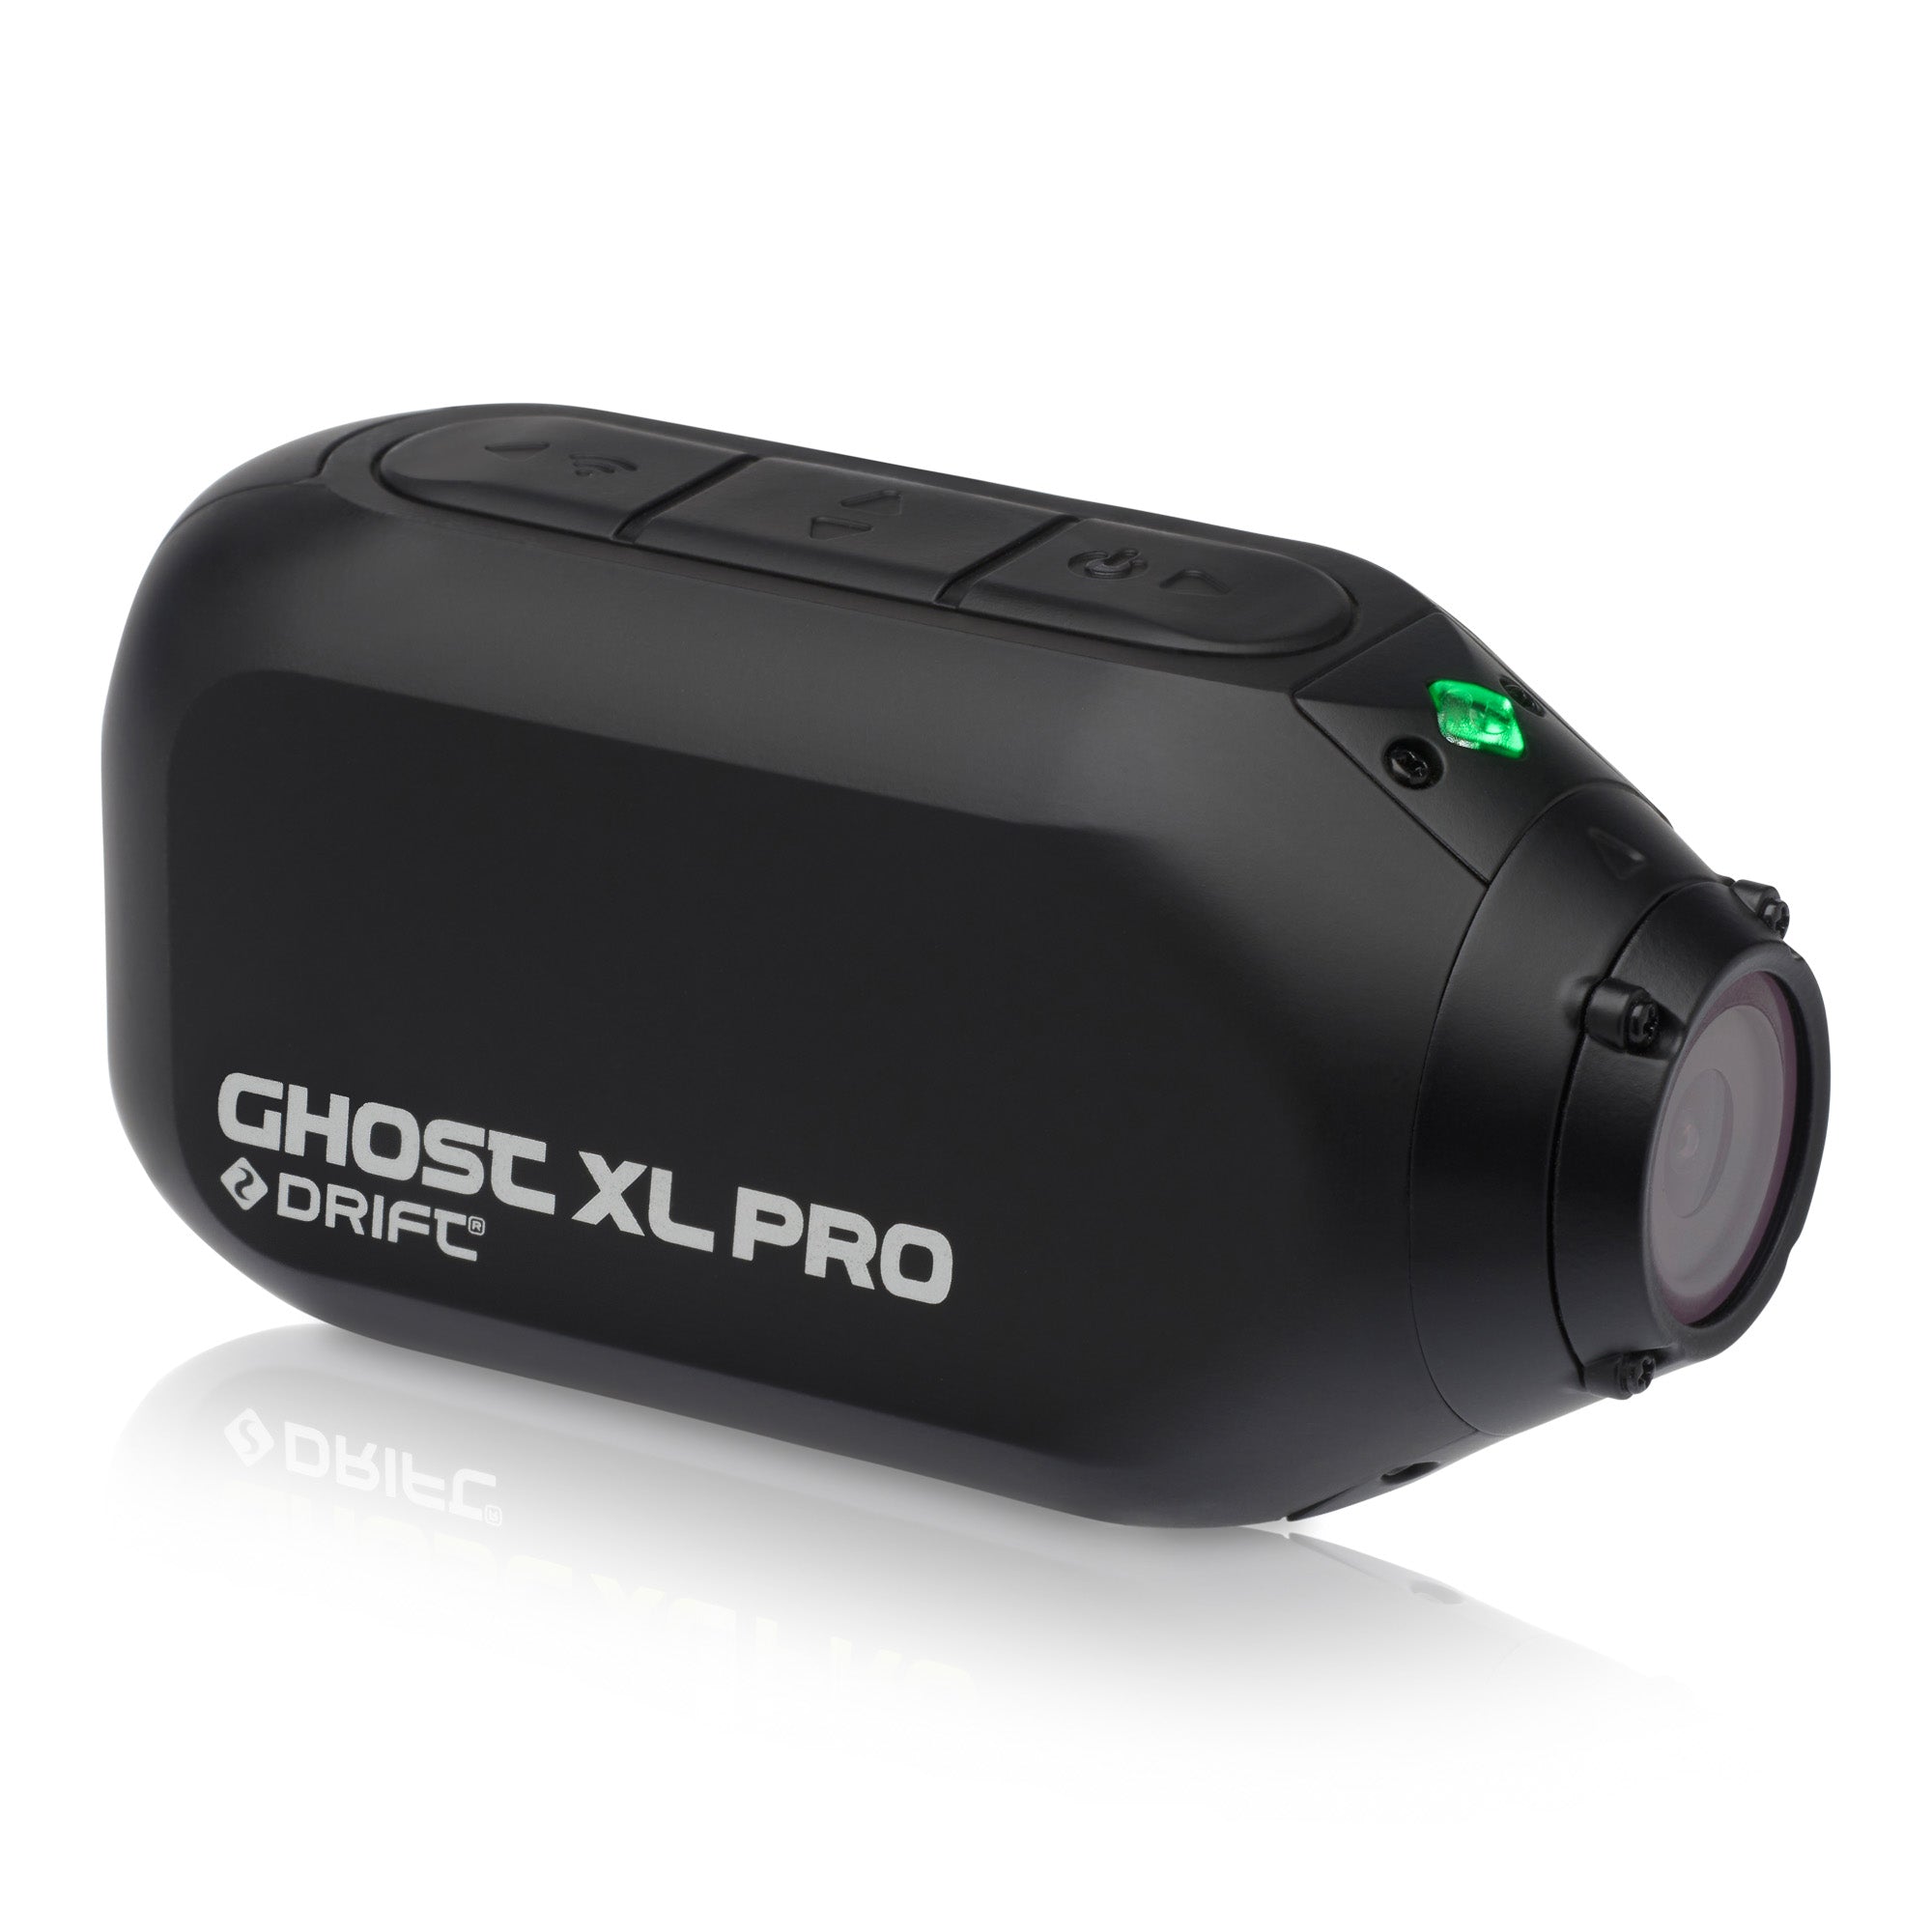 Ghost XL Pro